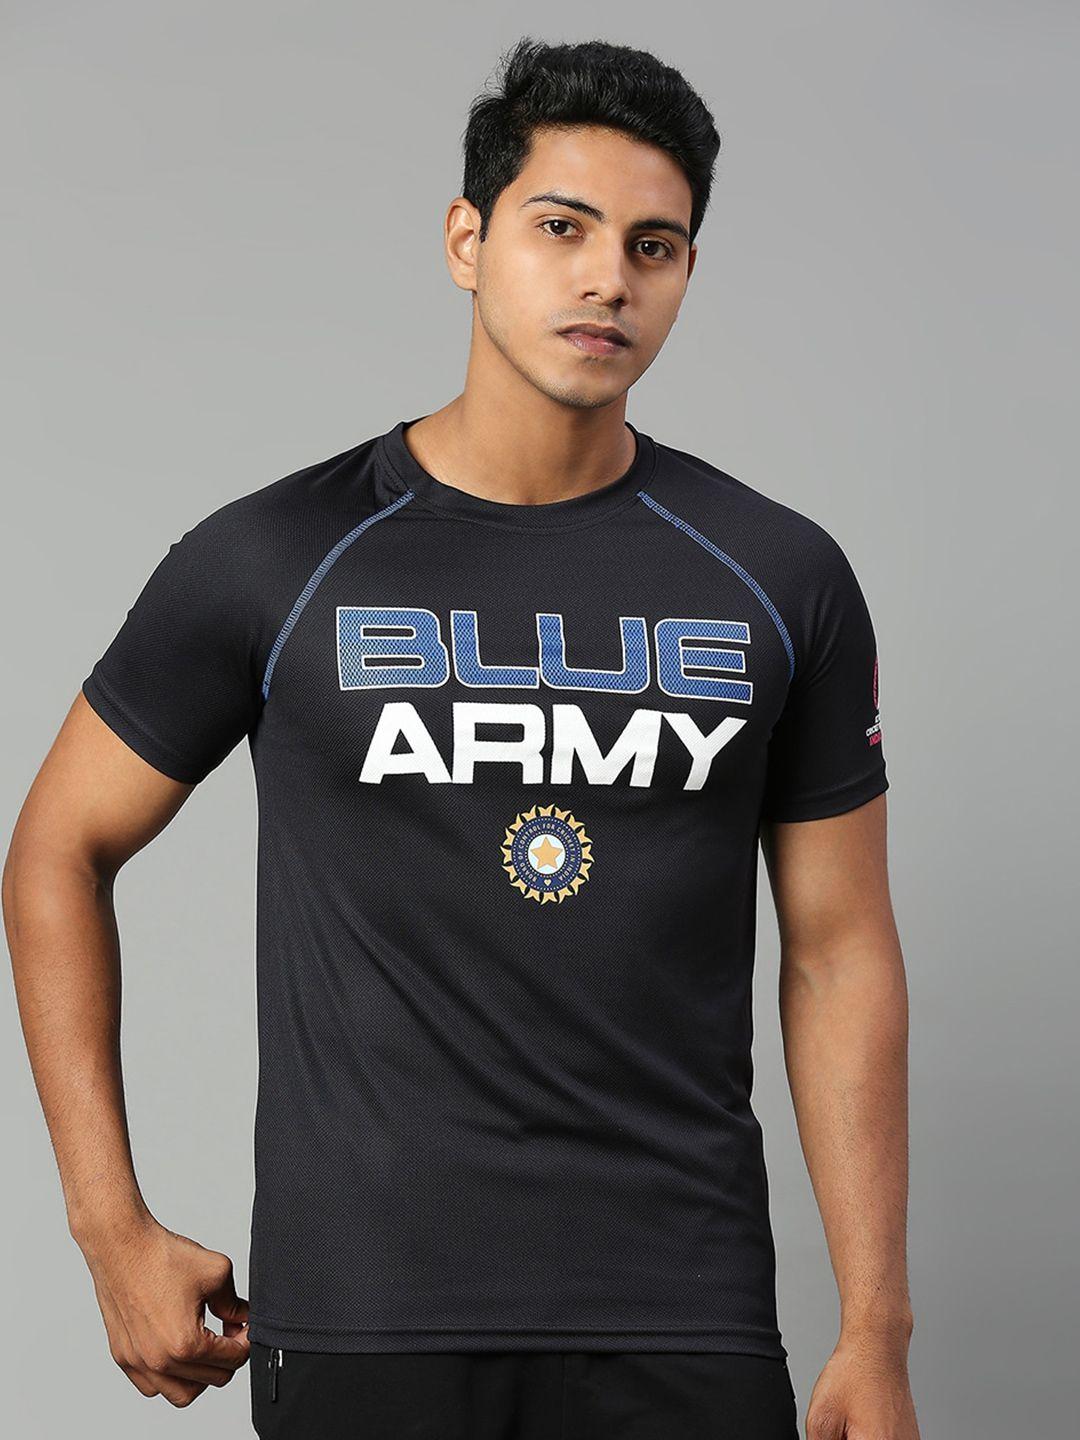 fancode printed indian cricket team raglan sleeves moisture wicking t-shirt